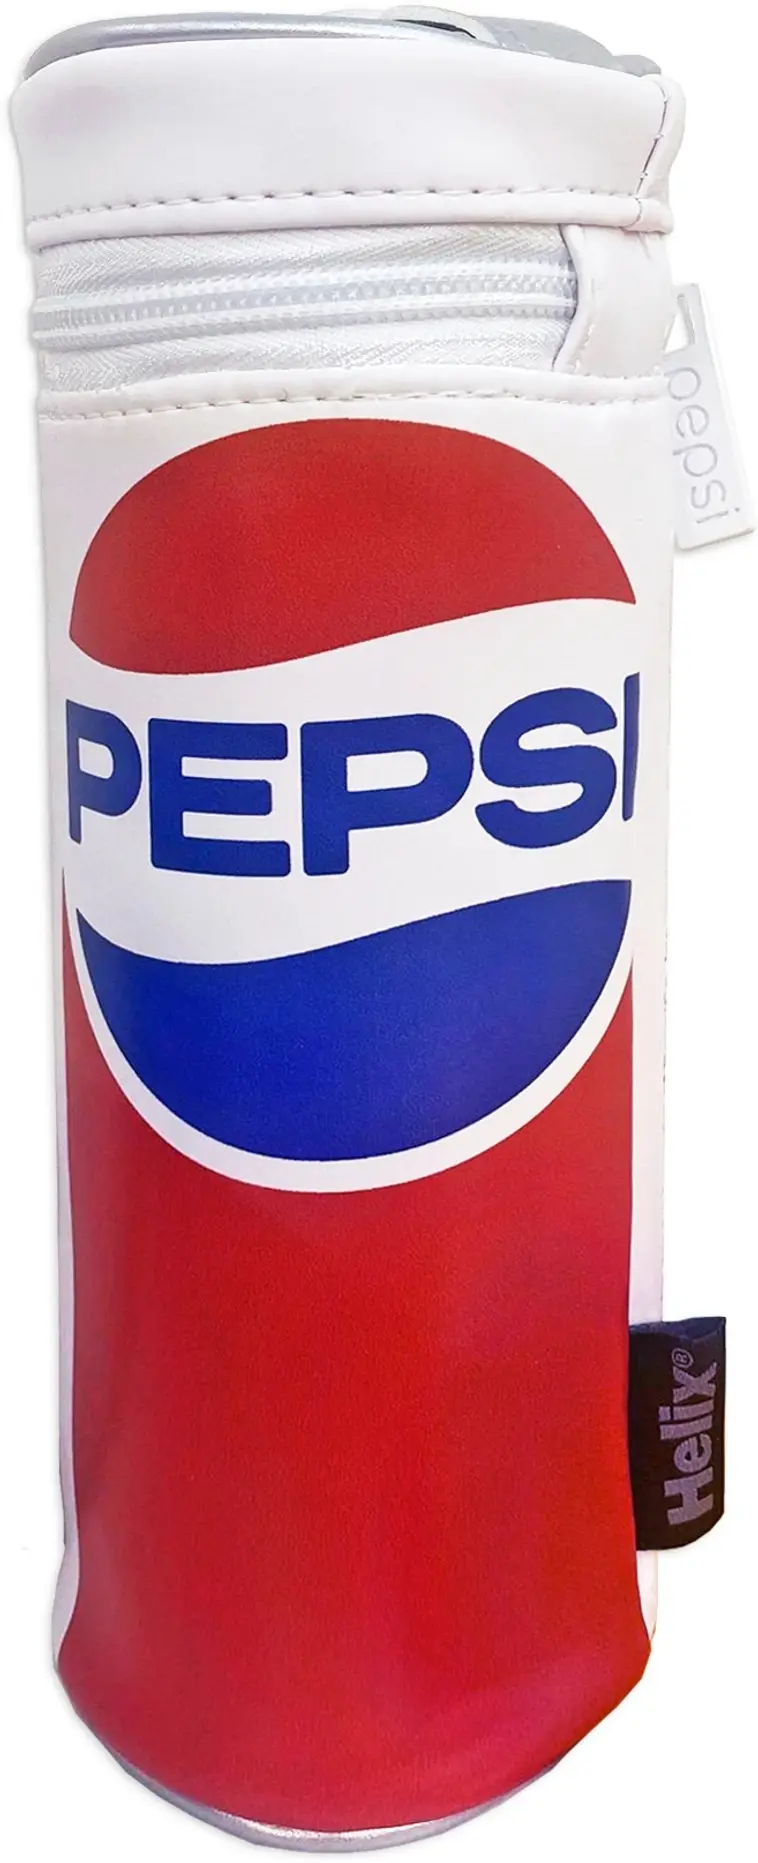 Pepsi retro purkkipenaali